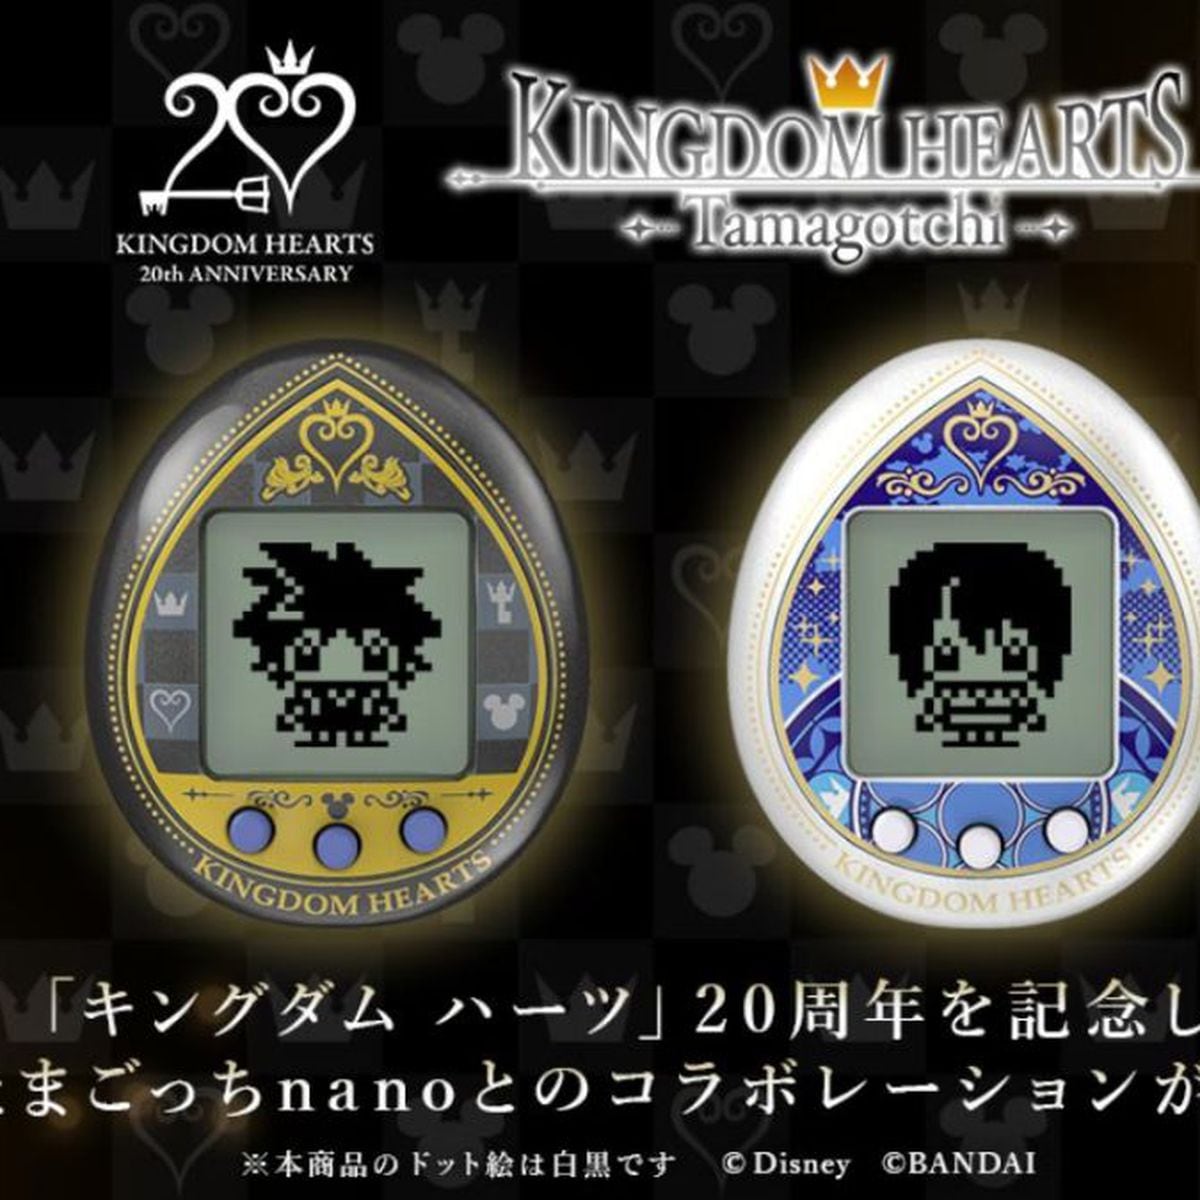 Tamagotchi Kingdom Hearts 20 aniversario light mode